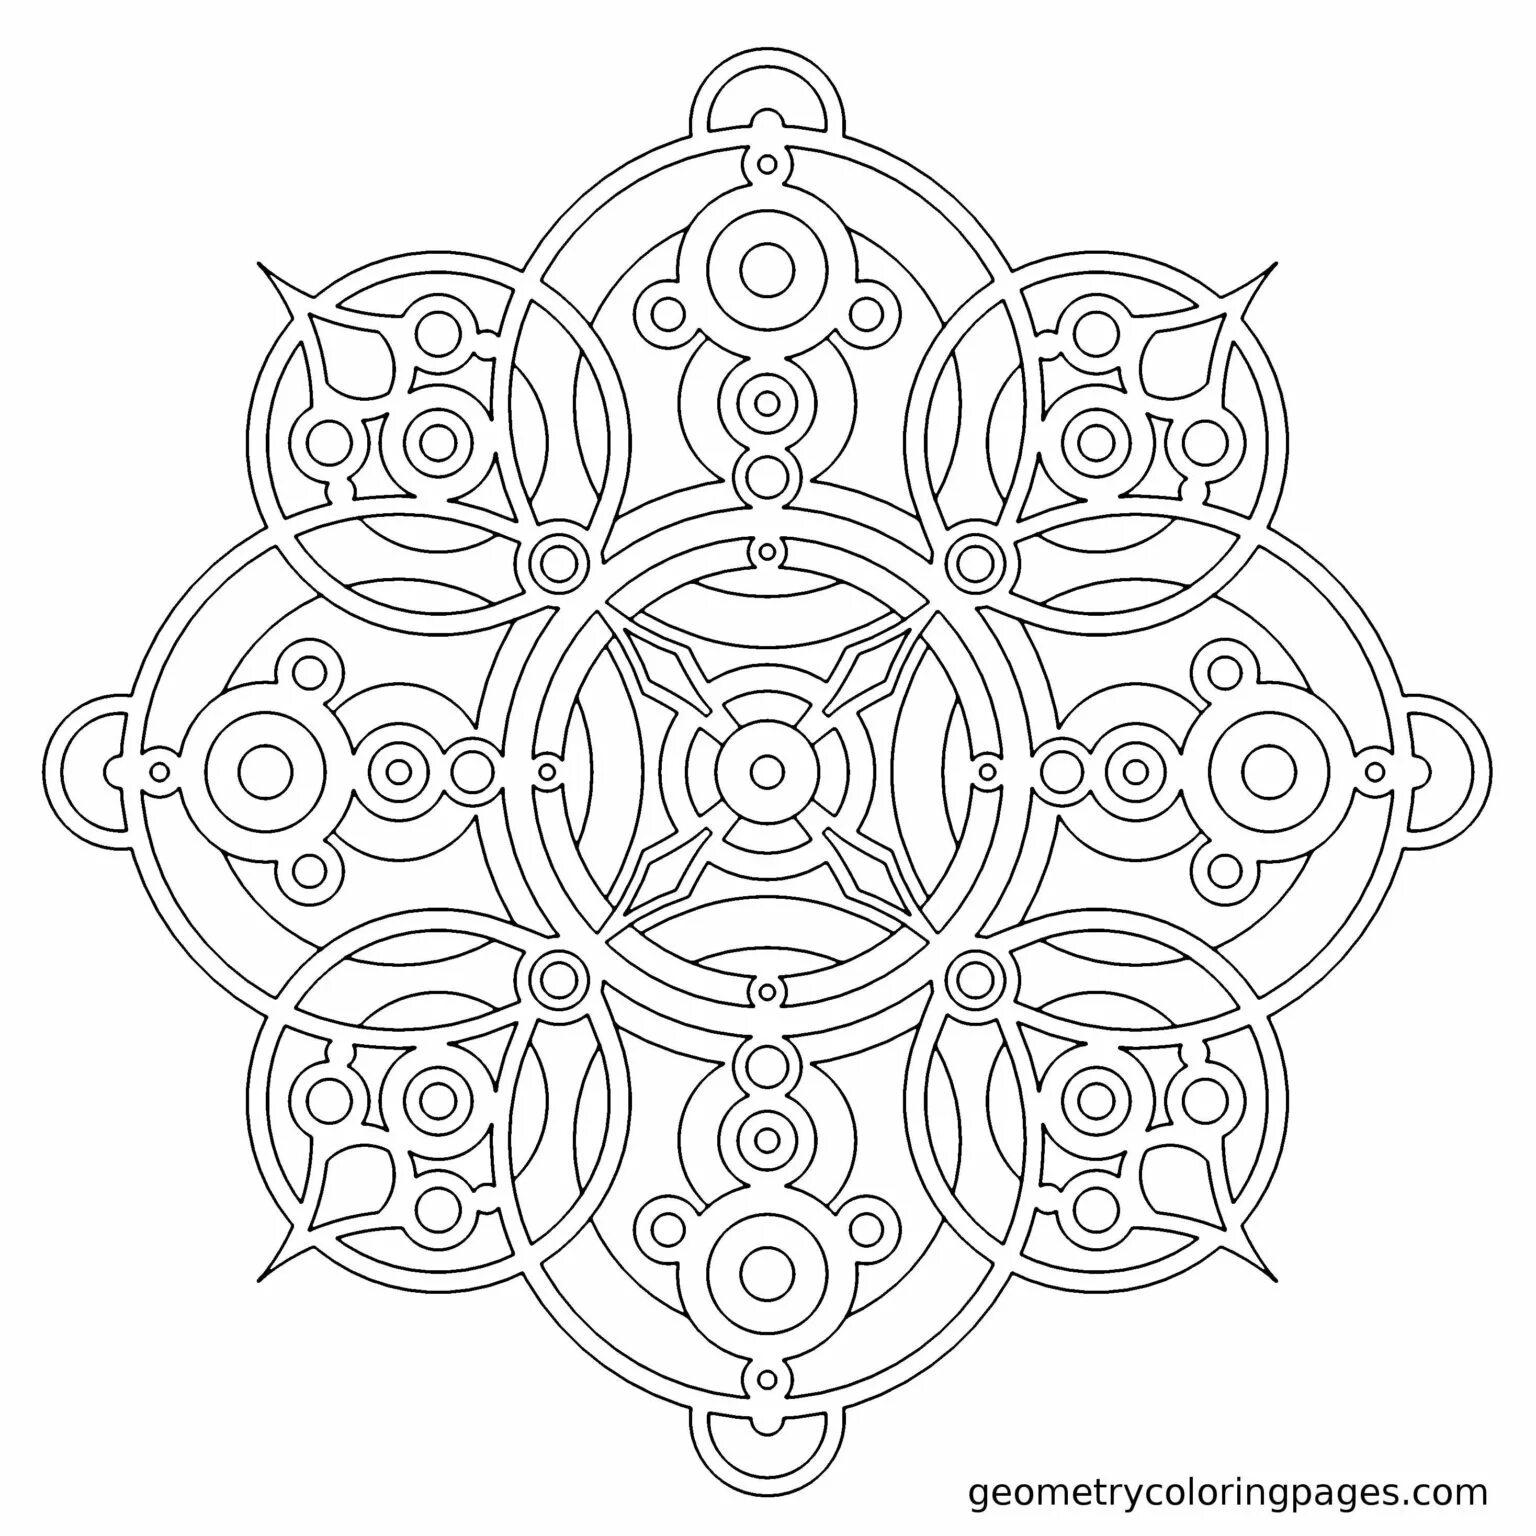 Mandala of abundance and wealth #2